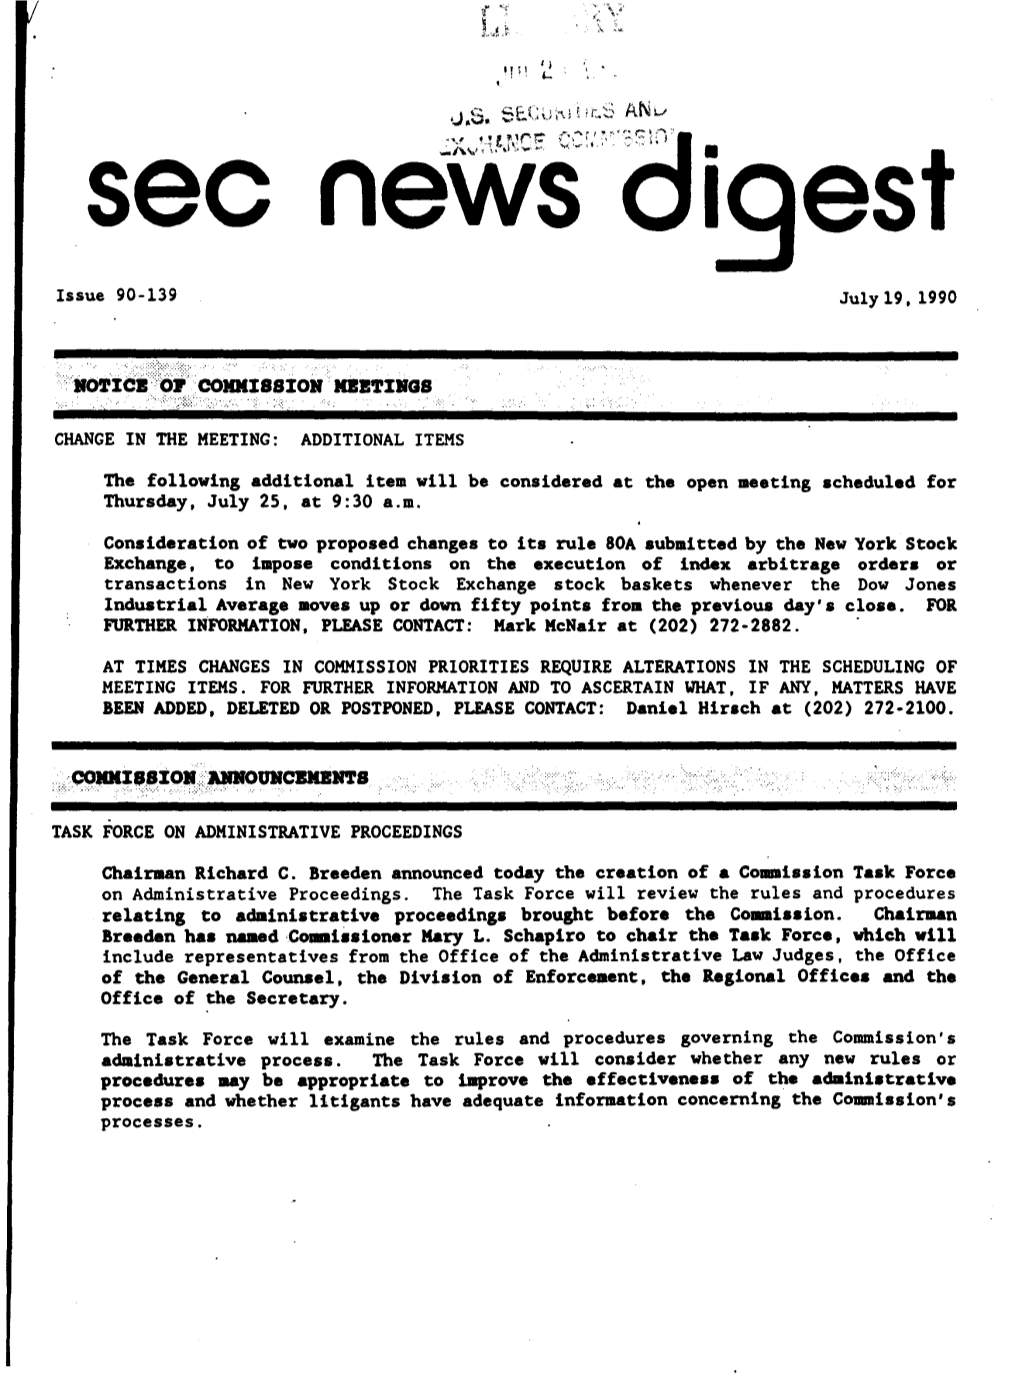 SEC News Digest, 07-19-1990